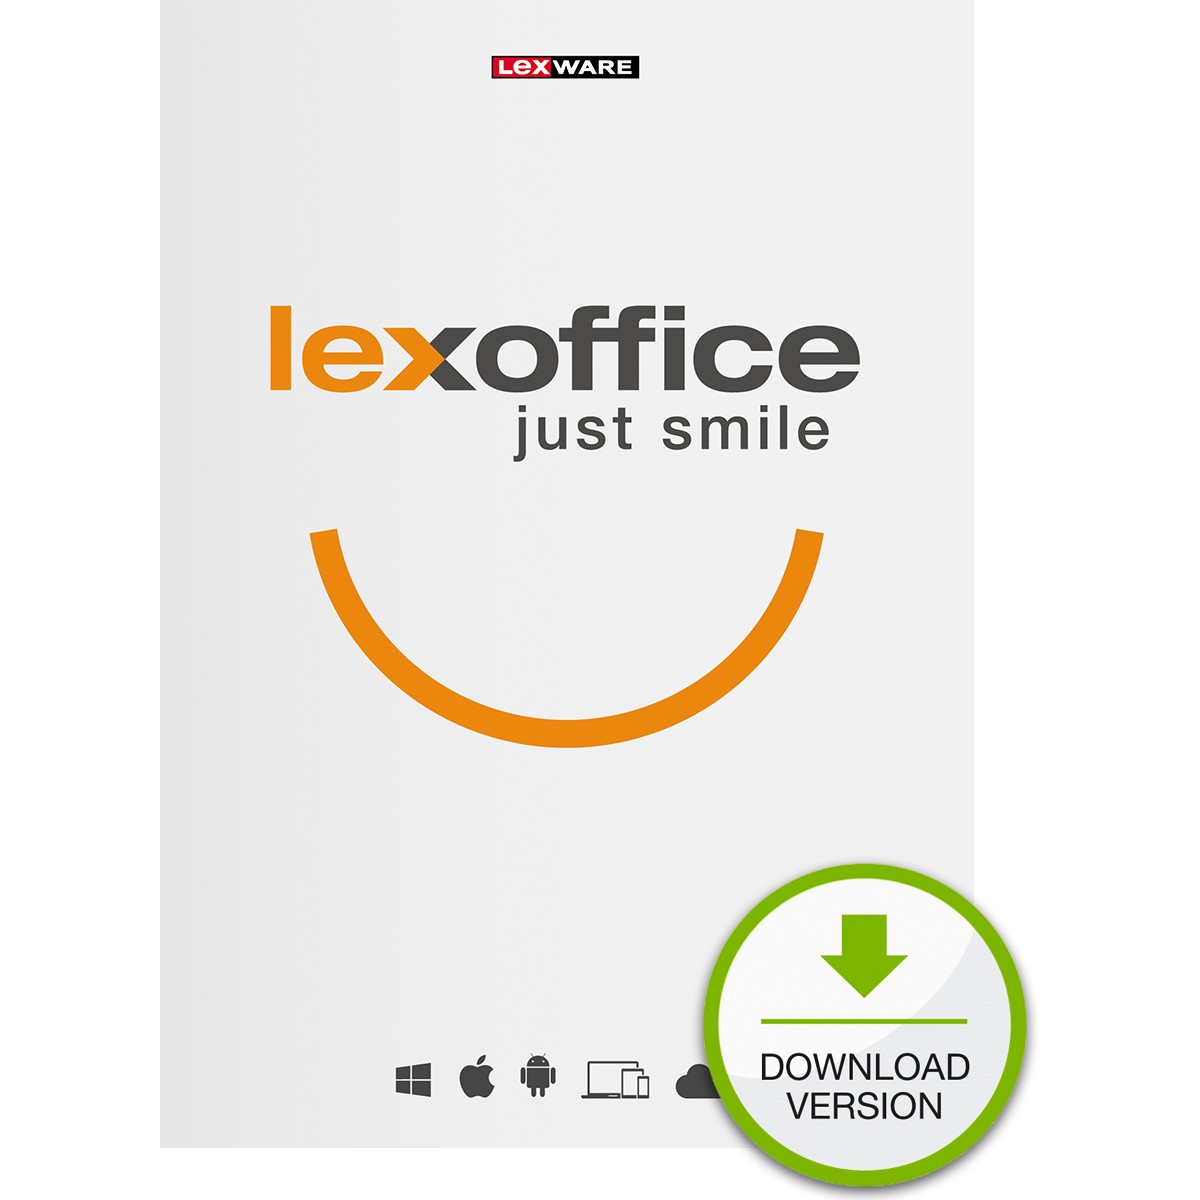 Lexware lexoffice XL 1 Year ESD-DownloadESD - 01347-0563